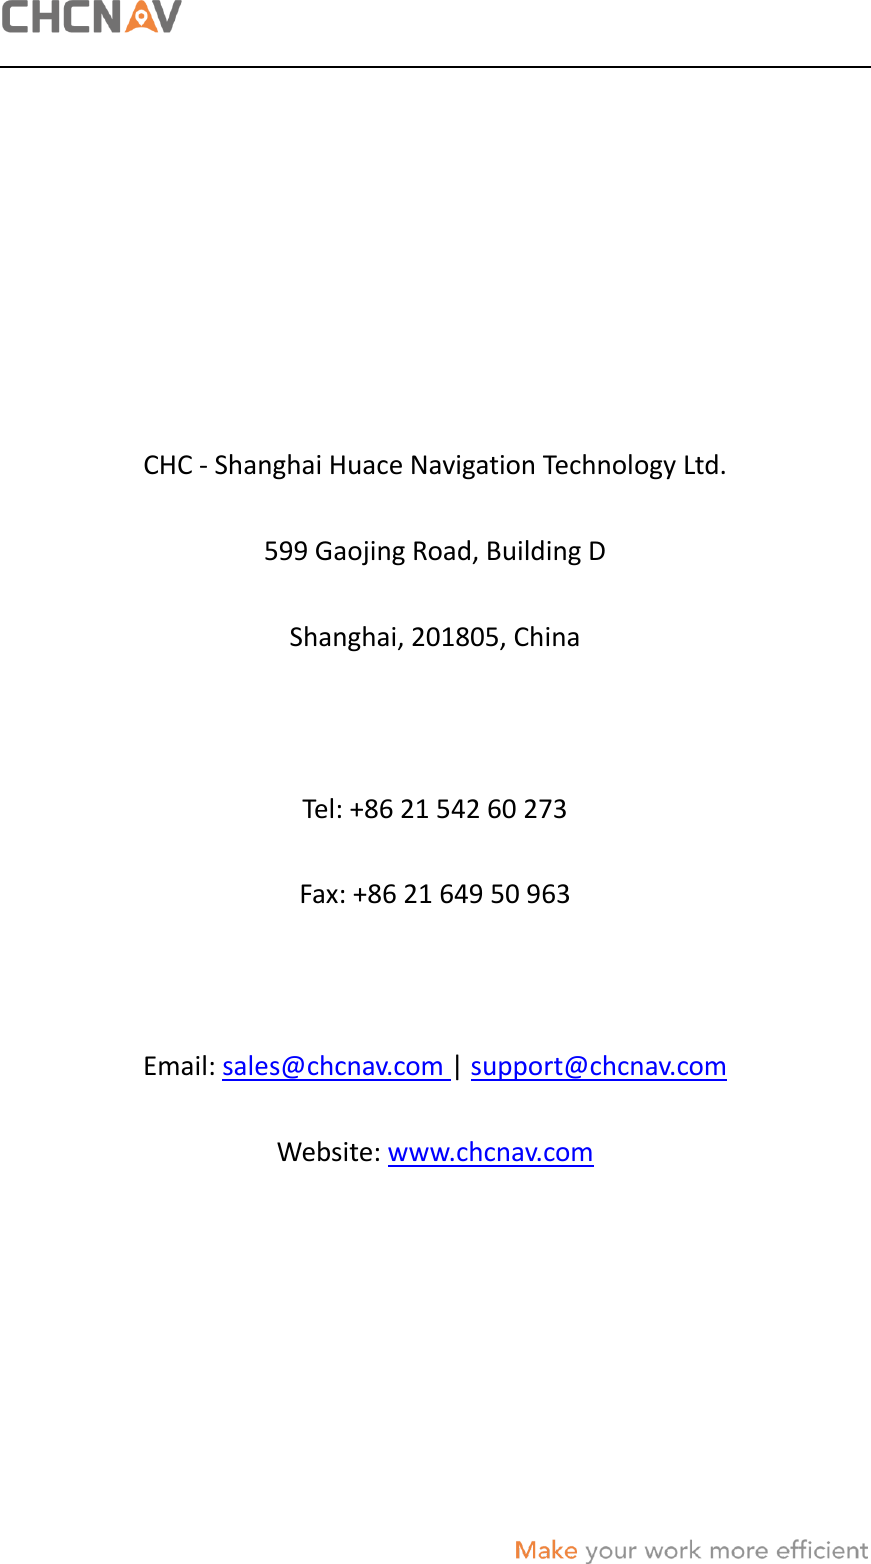       CHC - Shanghai Huace Navigation Technology Ltd. 599 Gaojing Road, Building D Shanghai, 201805, China  Tel: +86 21 542 60 273 Fax: +86 21 649 50 963  Email: sales@chcnav.com | support@chcnav.com Website: www.chcnav.com     